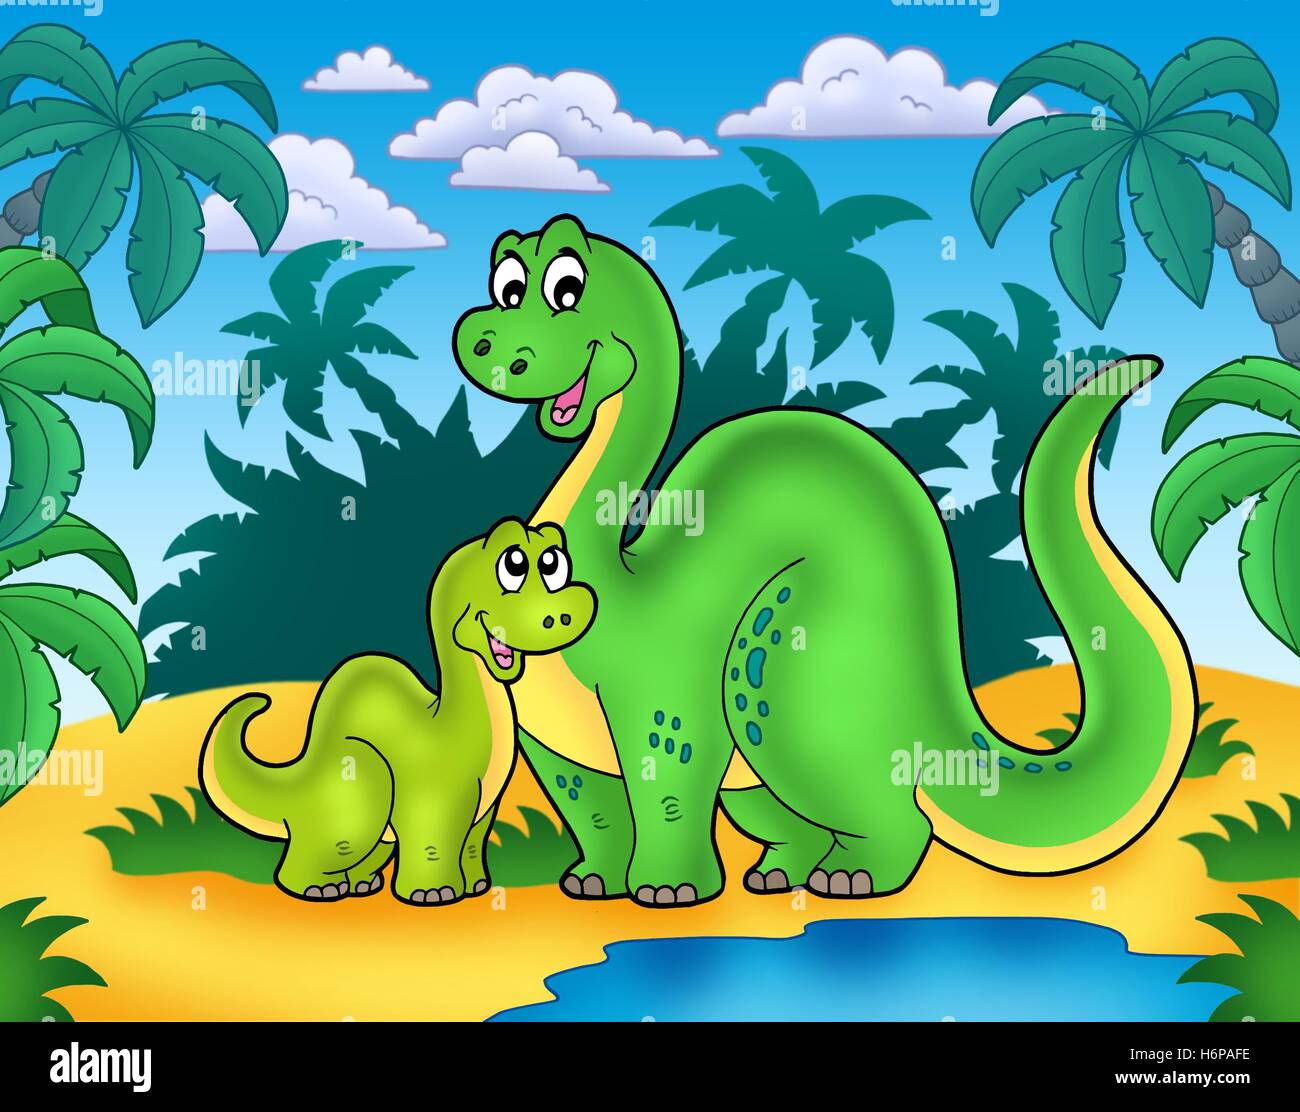 Dinosauro jurassic preistoria preistoria ridere risate ridere twit risatina sorriso sorridente risate laughingly sorridendo sorrisi Foto Stock